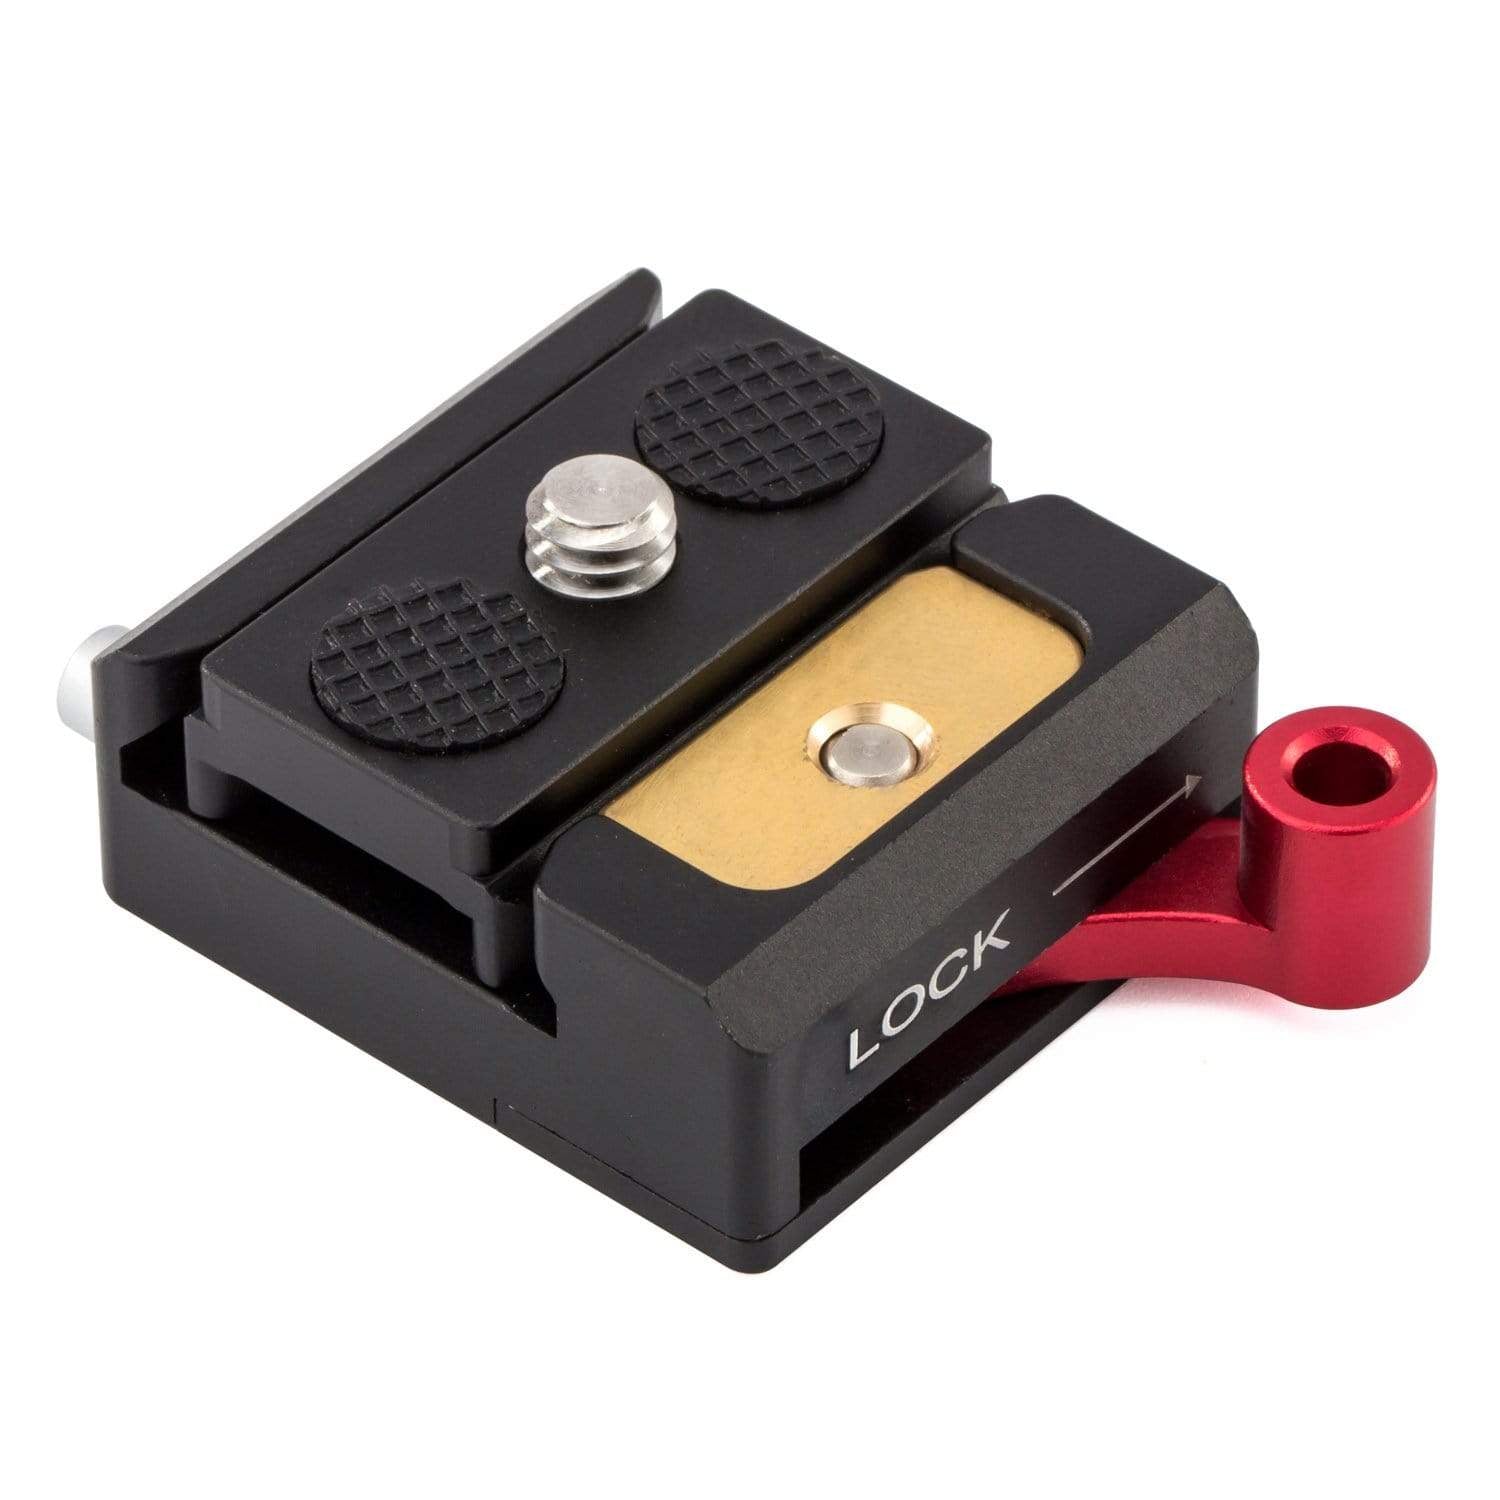 POWRIG camera accessories On-camera Monitor Quick Release Plate Adaptor